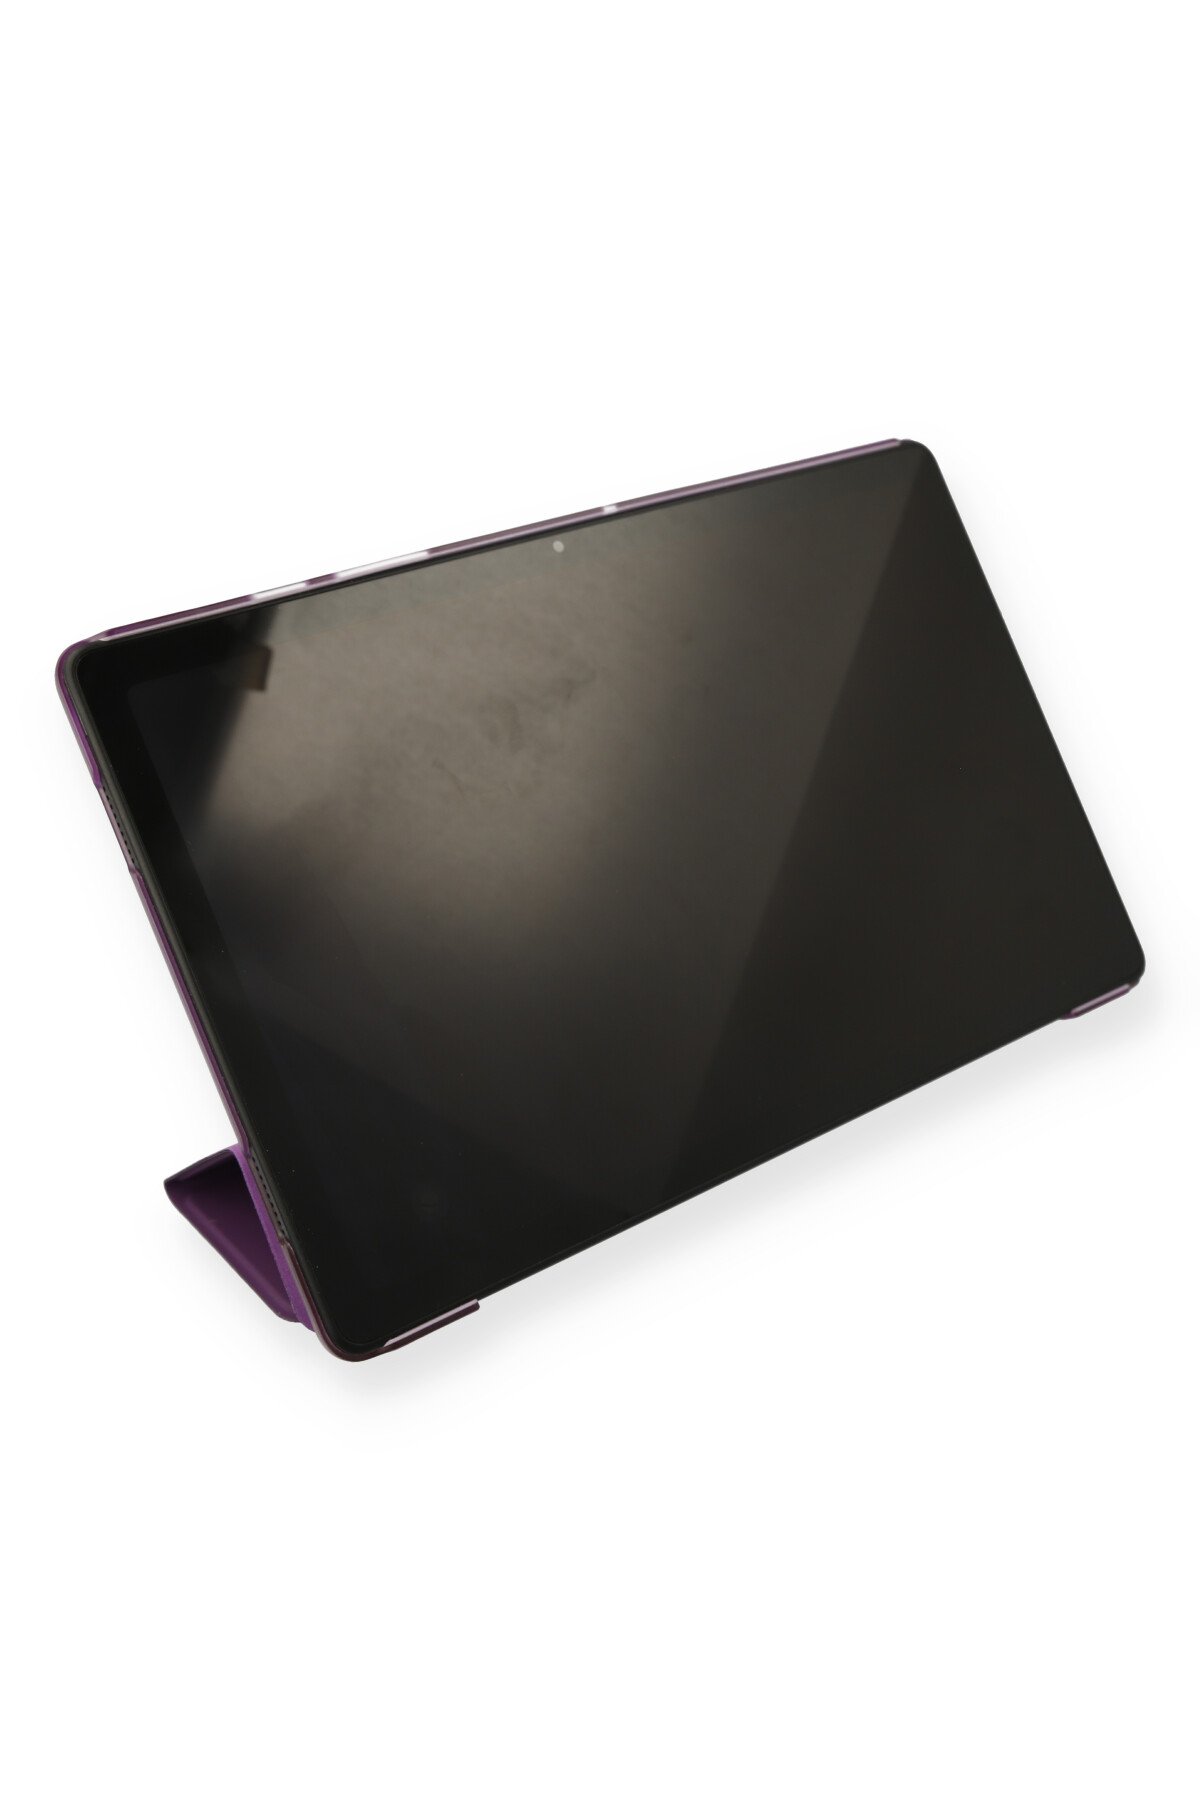 Newface iPad 5 Air 9.7 Kılıf Griffin Tablet Kapak - Mavi